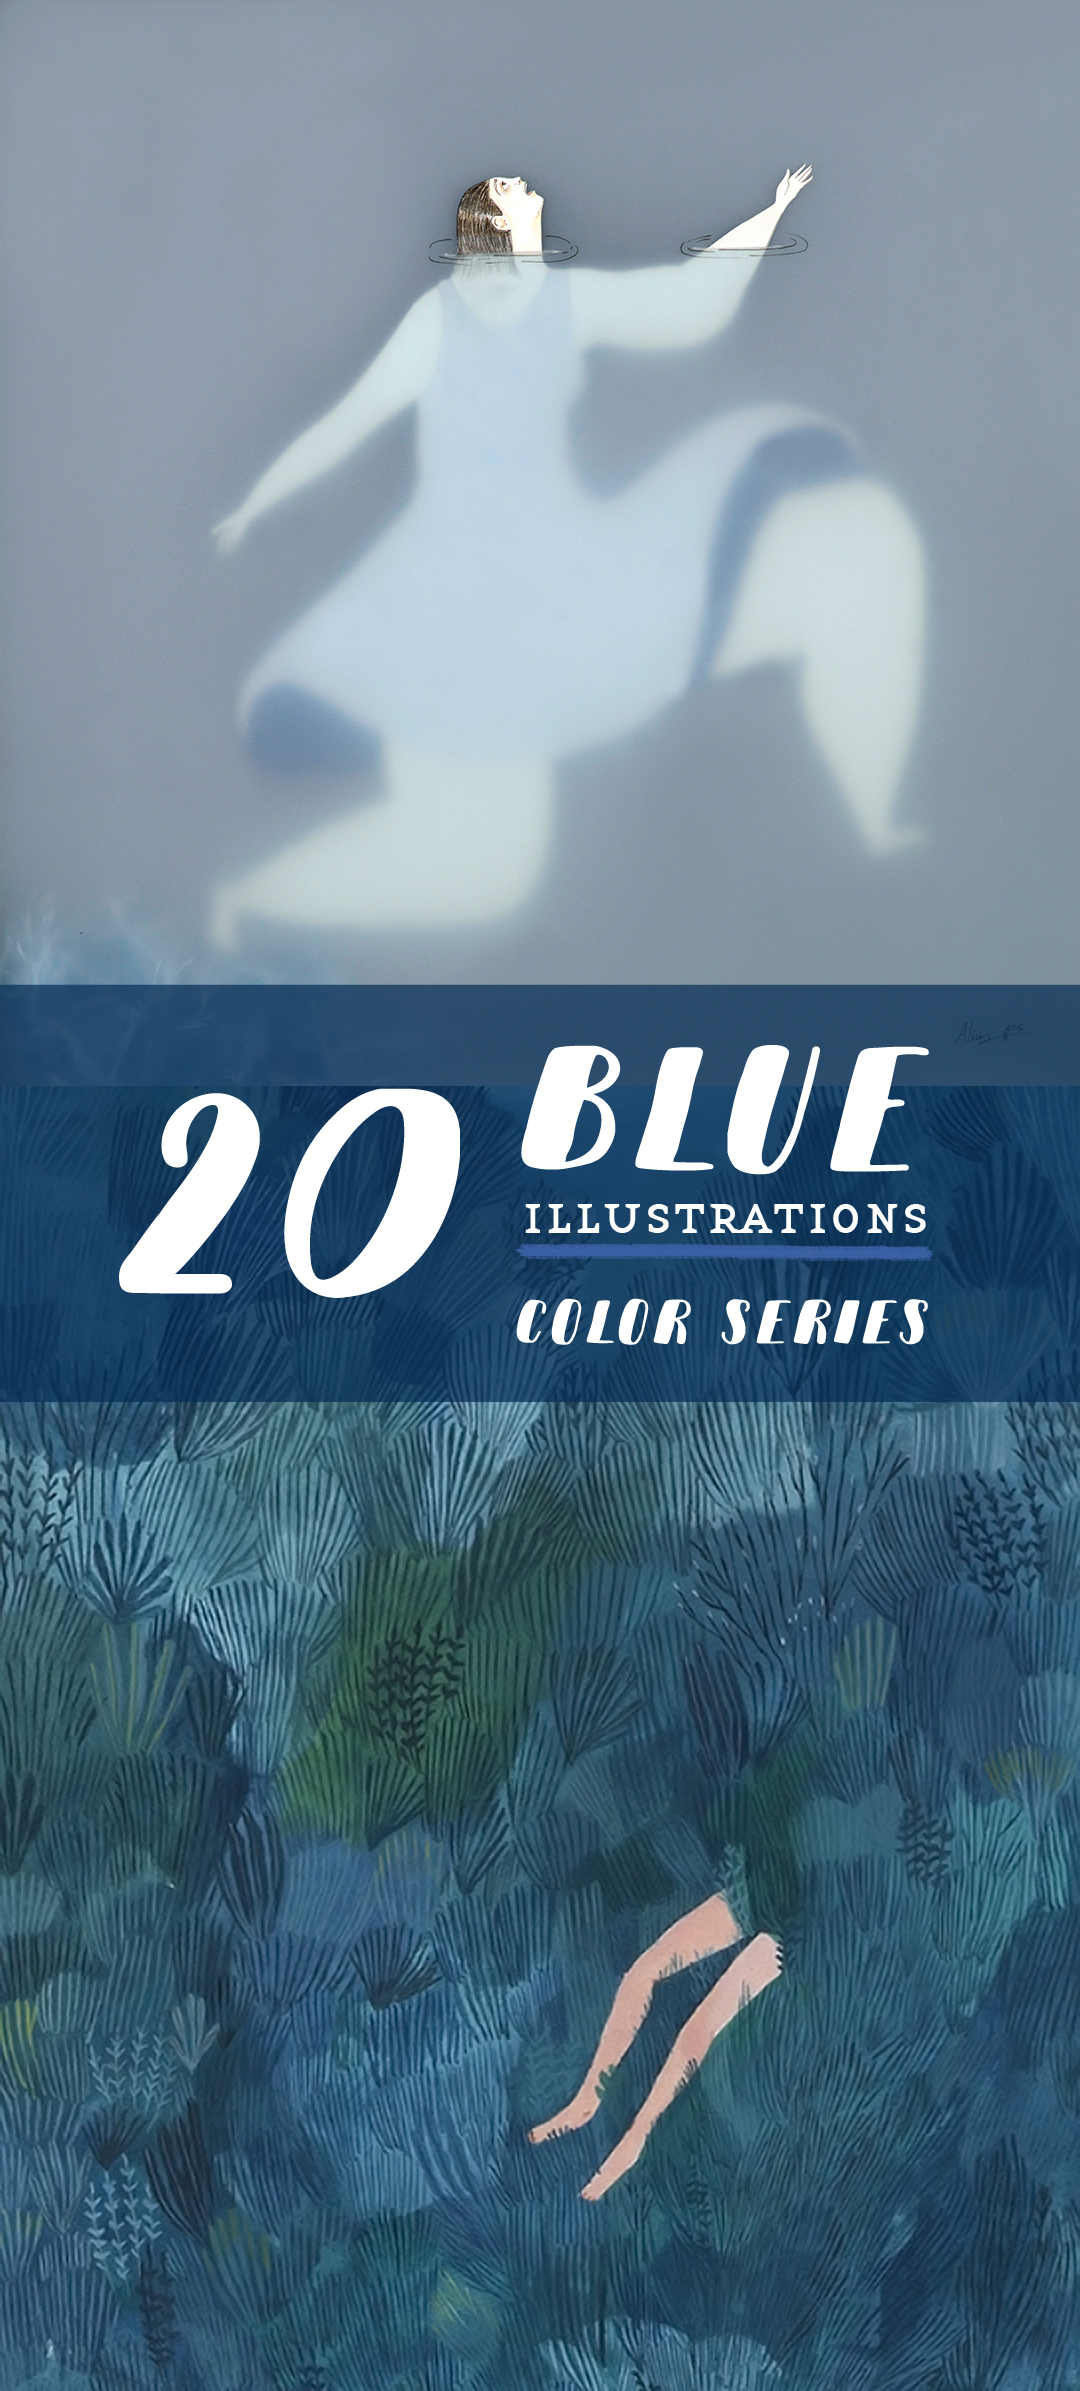 Blue illustrations